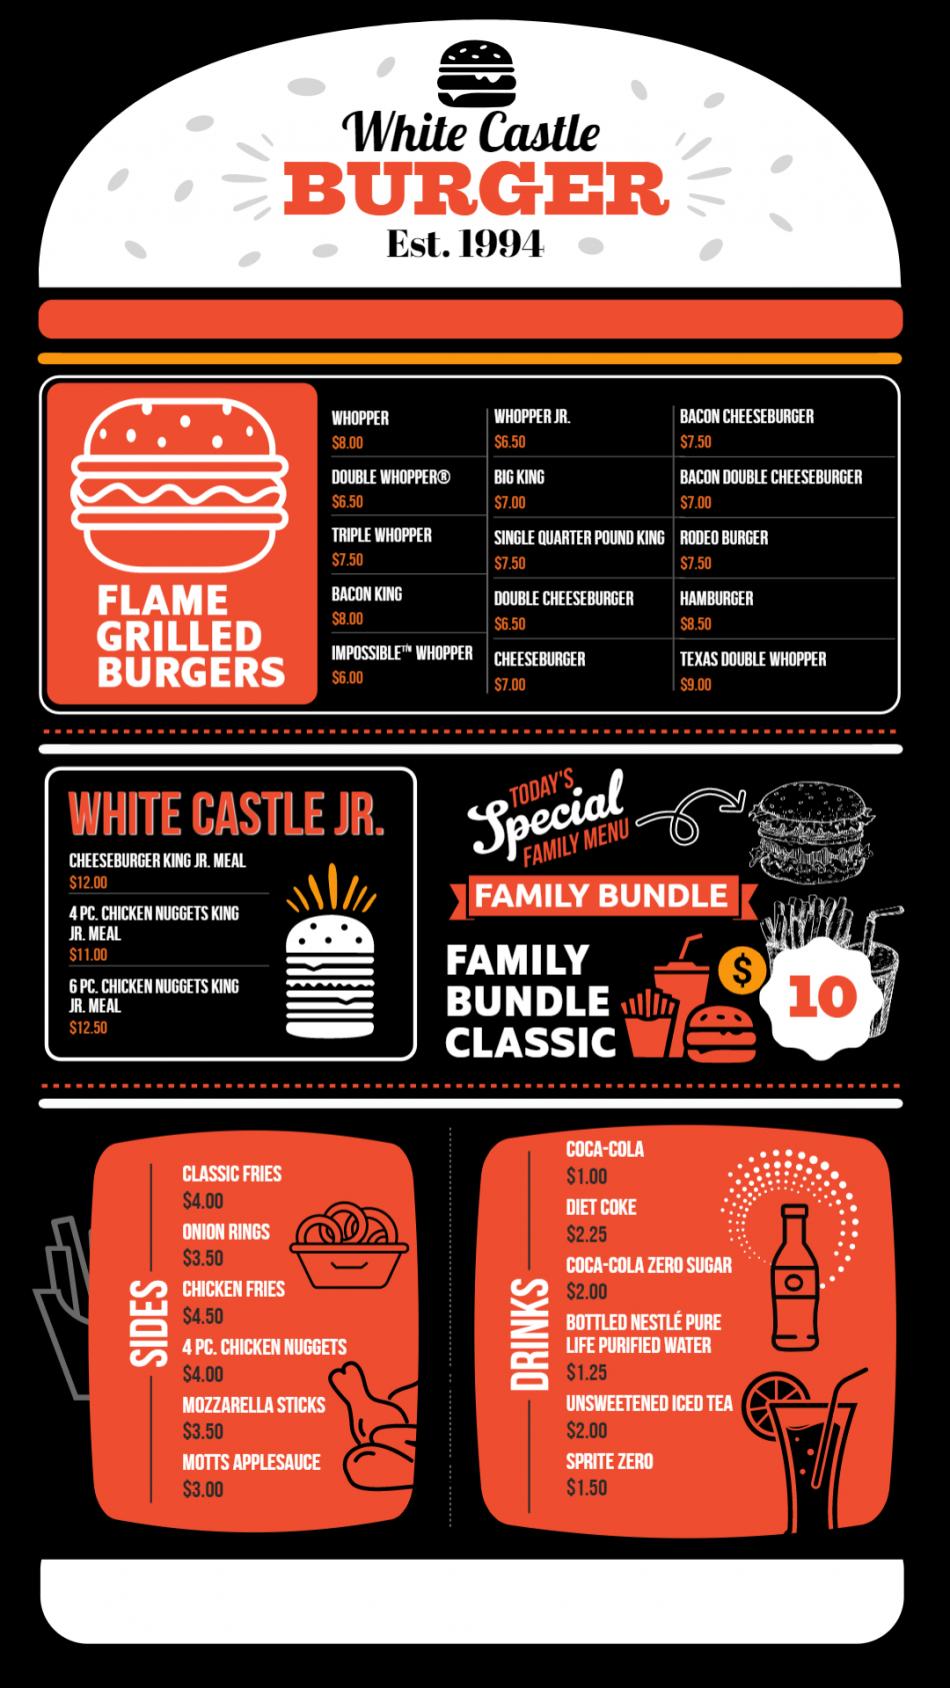 Captivating Burger Vertical Menu Design: Showcasing Delicious Burger Offerings